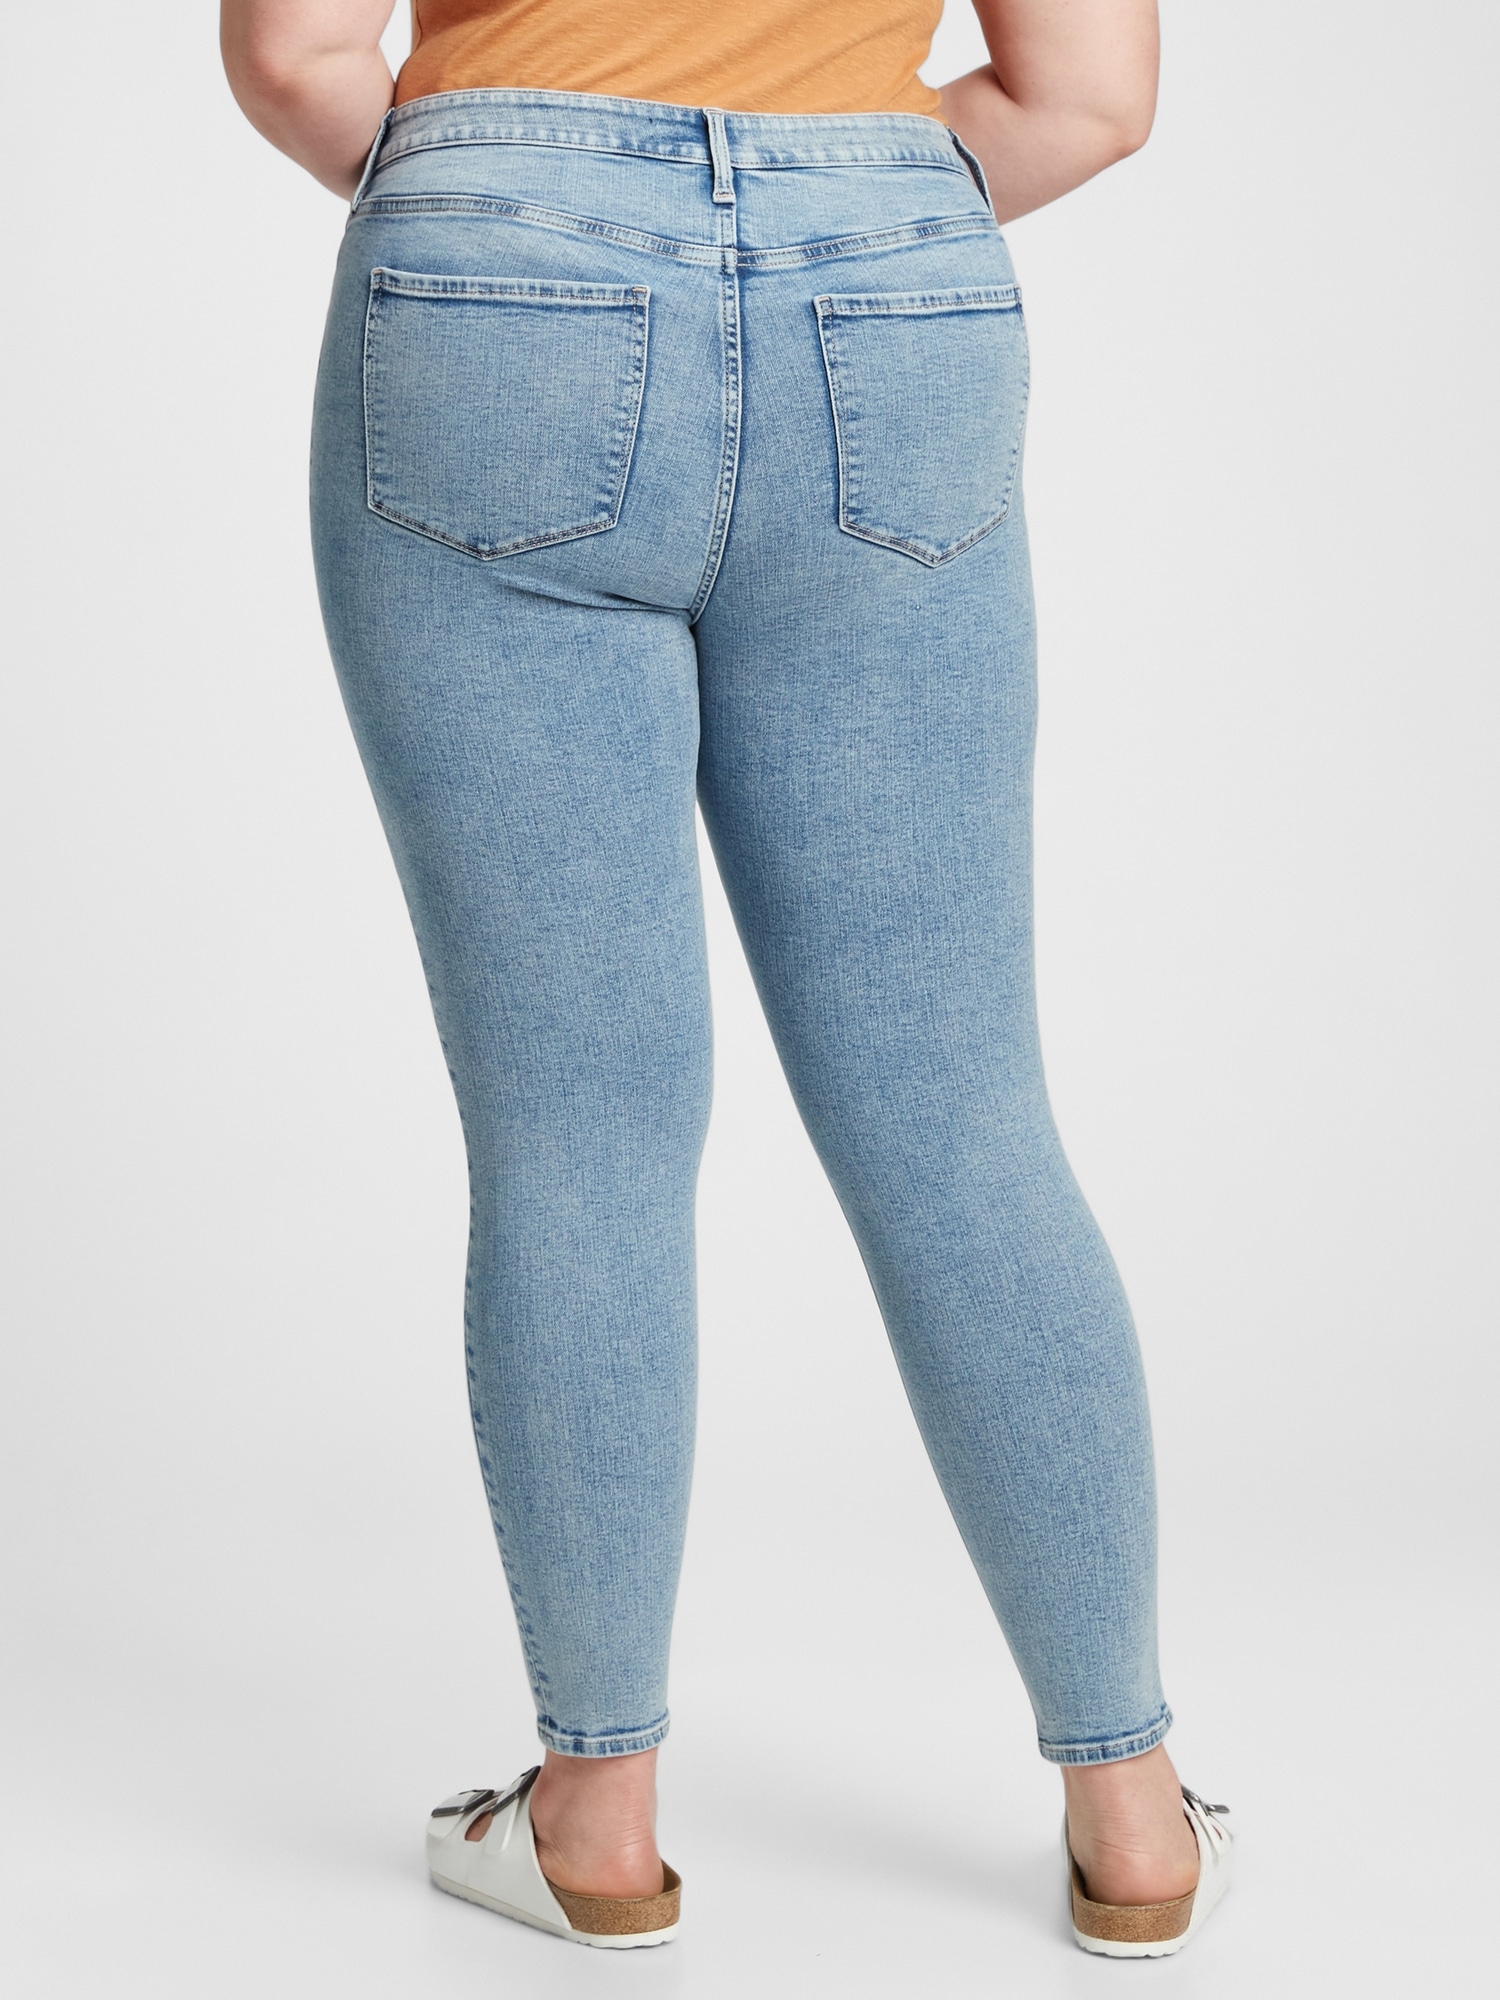 High Rise Legging Jeans Washwell | Gap Factory